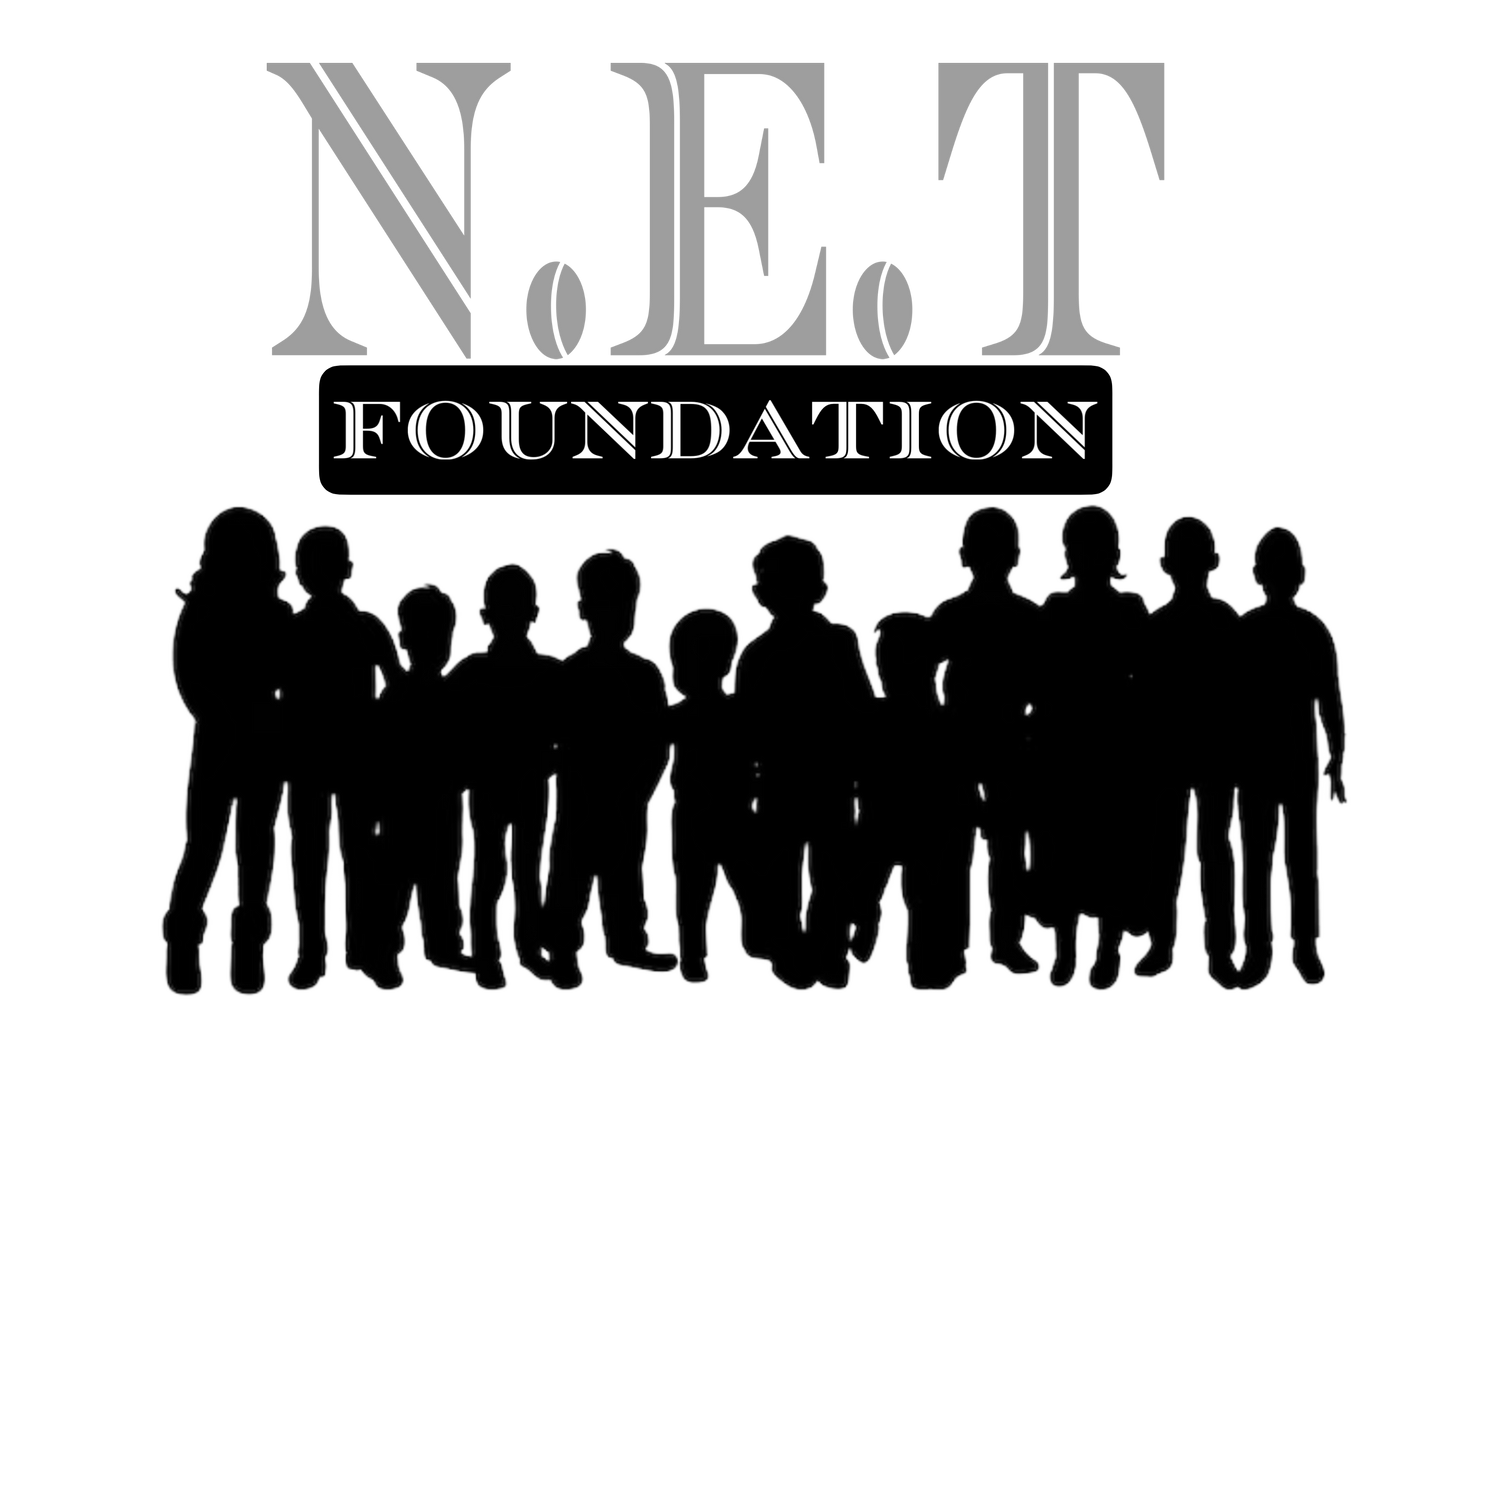 NET Foundation